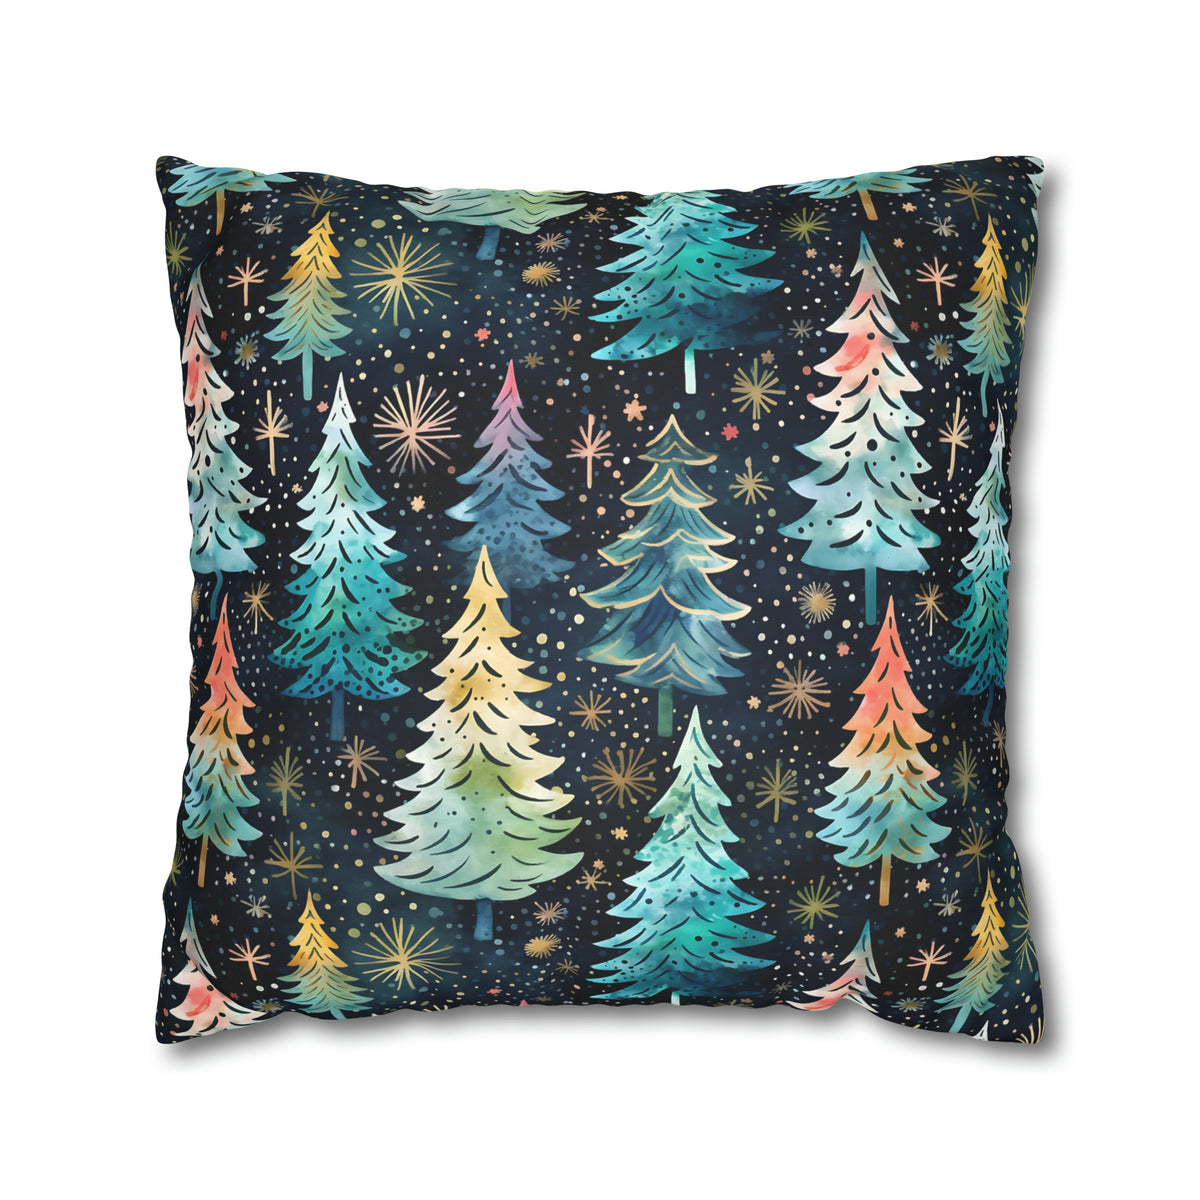 Teal Christmas Tree Throw Pillow Case | Christmas Pillow Home Decor | Faux Suede Decorative Throw Pillow Case